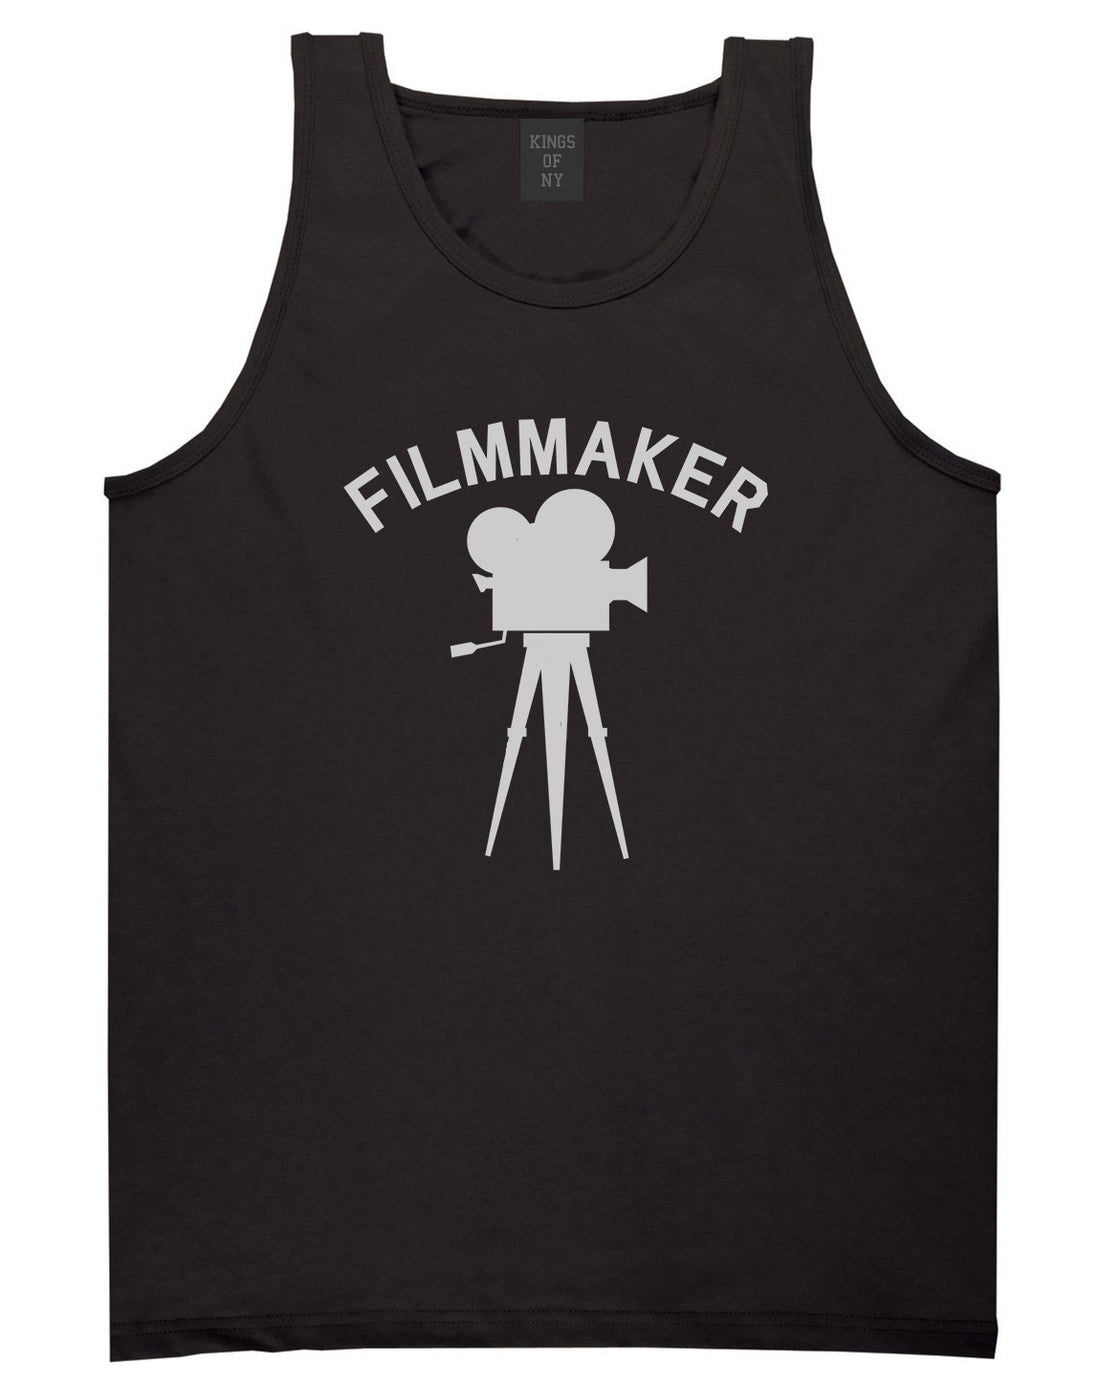 Filmmaker Camera Mens Black Tank Top Shirt by KINGS OF NY